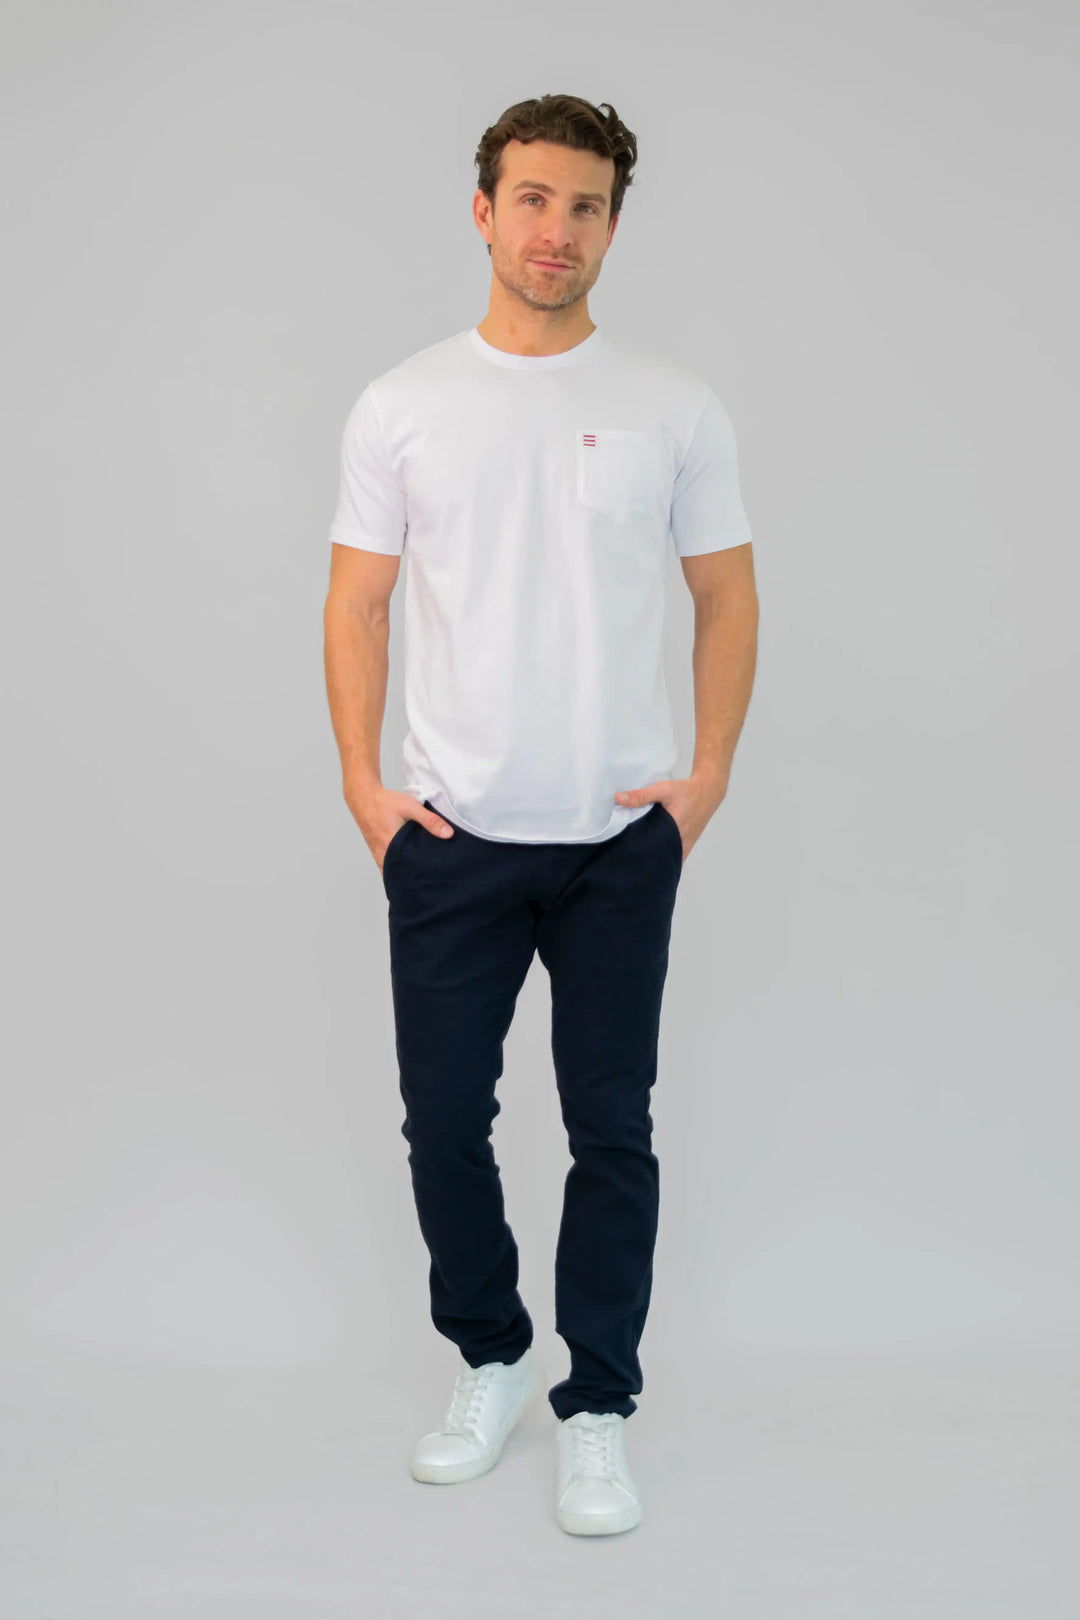 T Shirt Premium Blanca